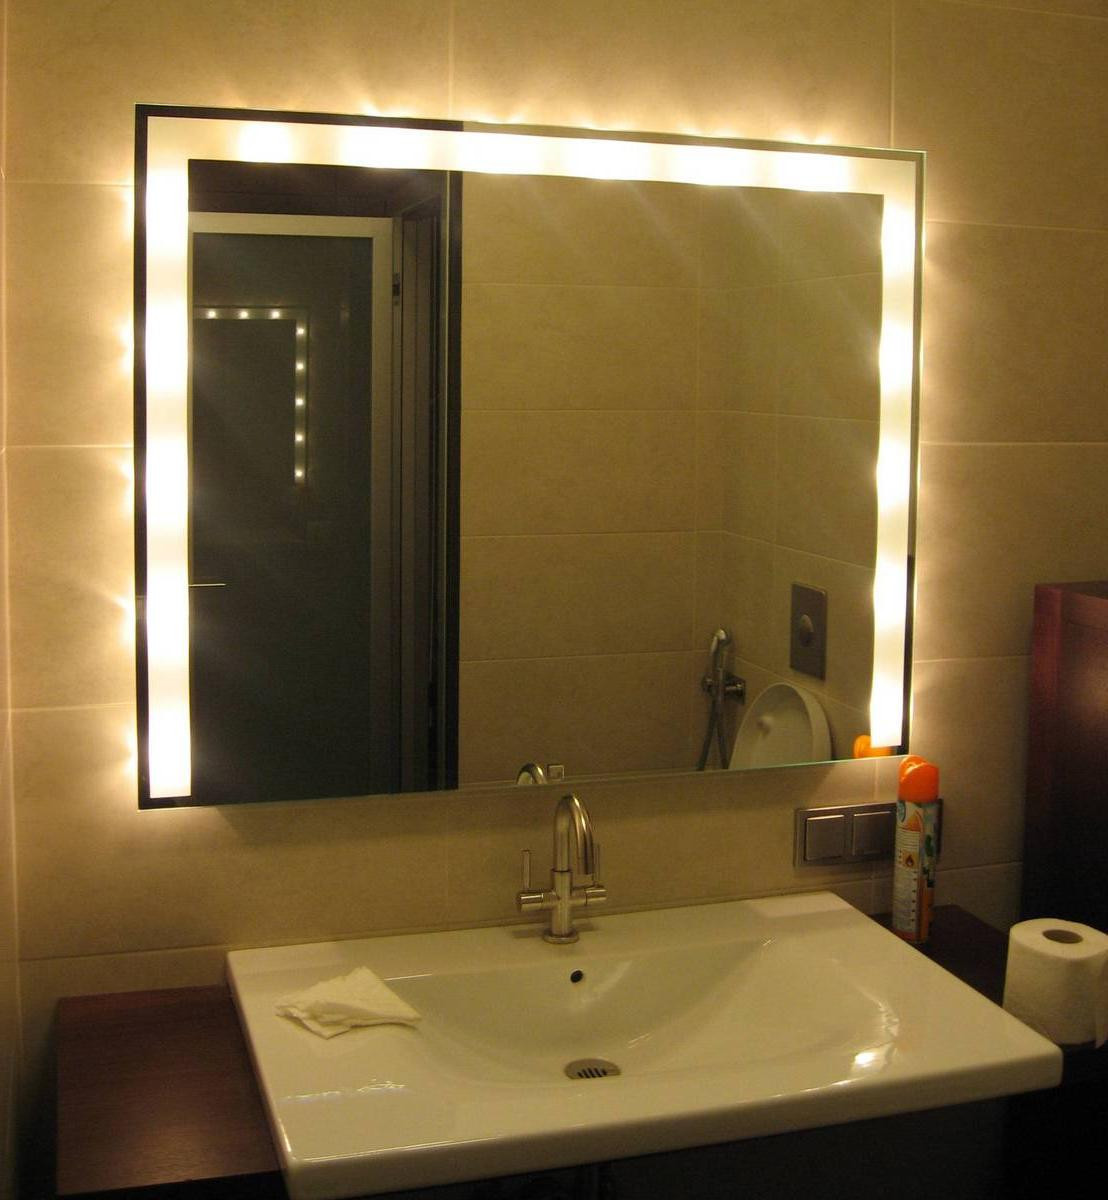 Led Bathroom Light
 amazing bathroom led lighting design behind square mirror